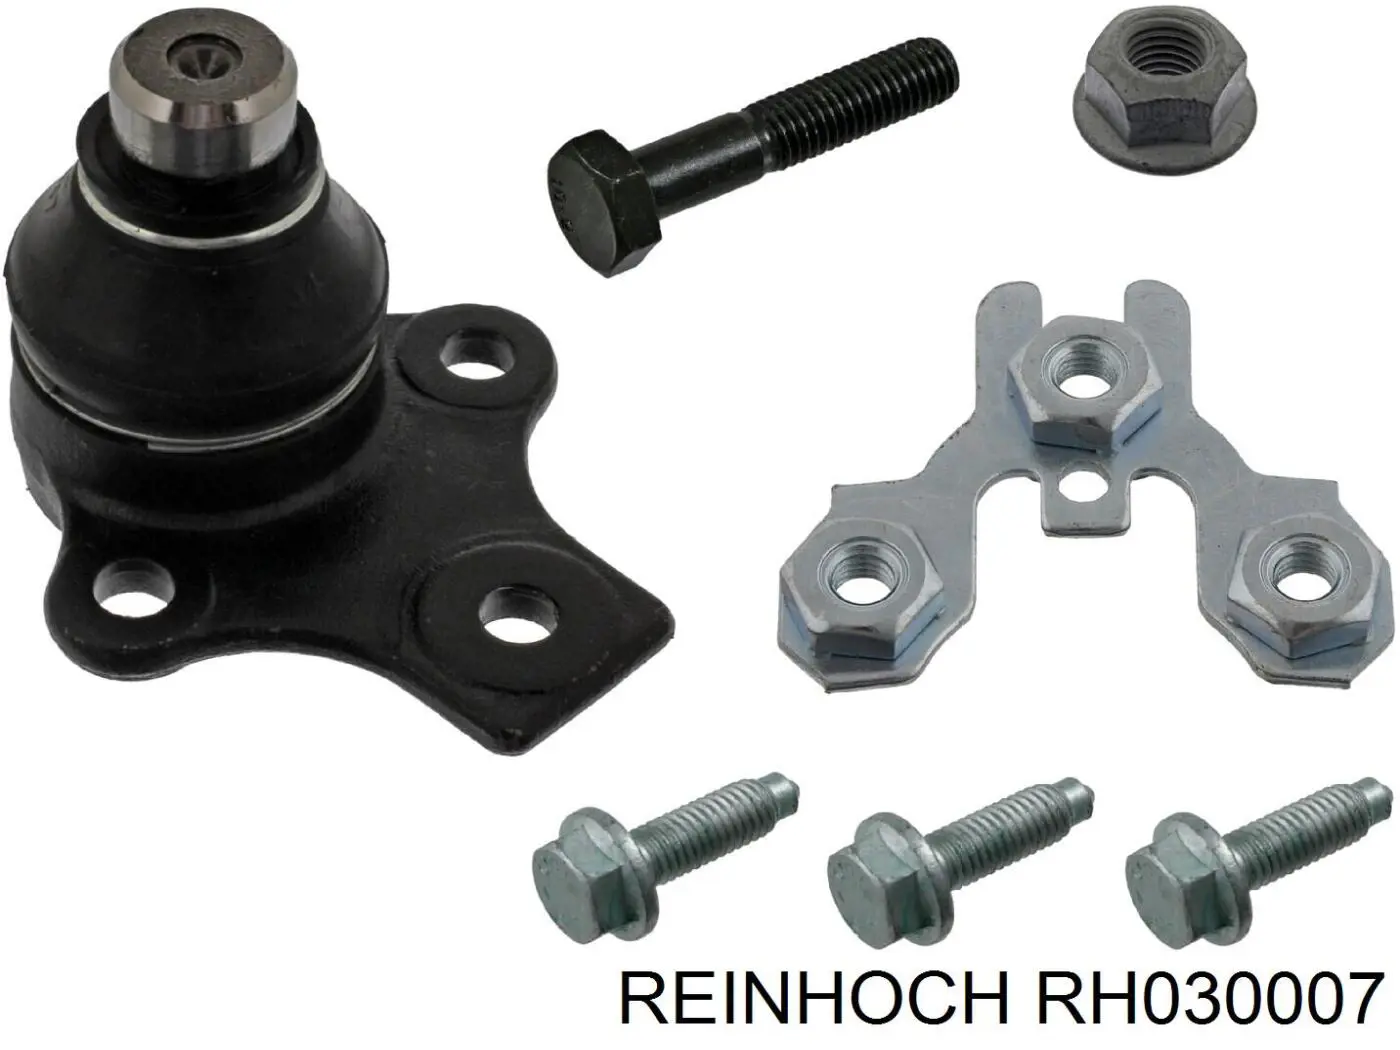 RH030007 Reinhoch suporte de esfera inferior